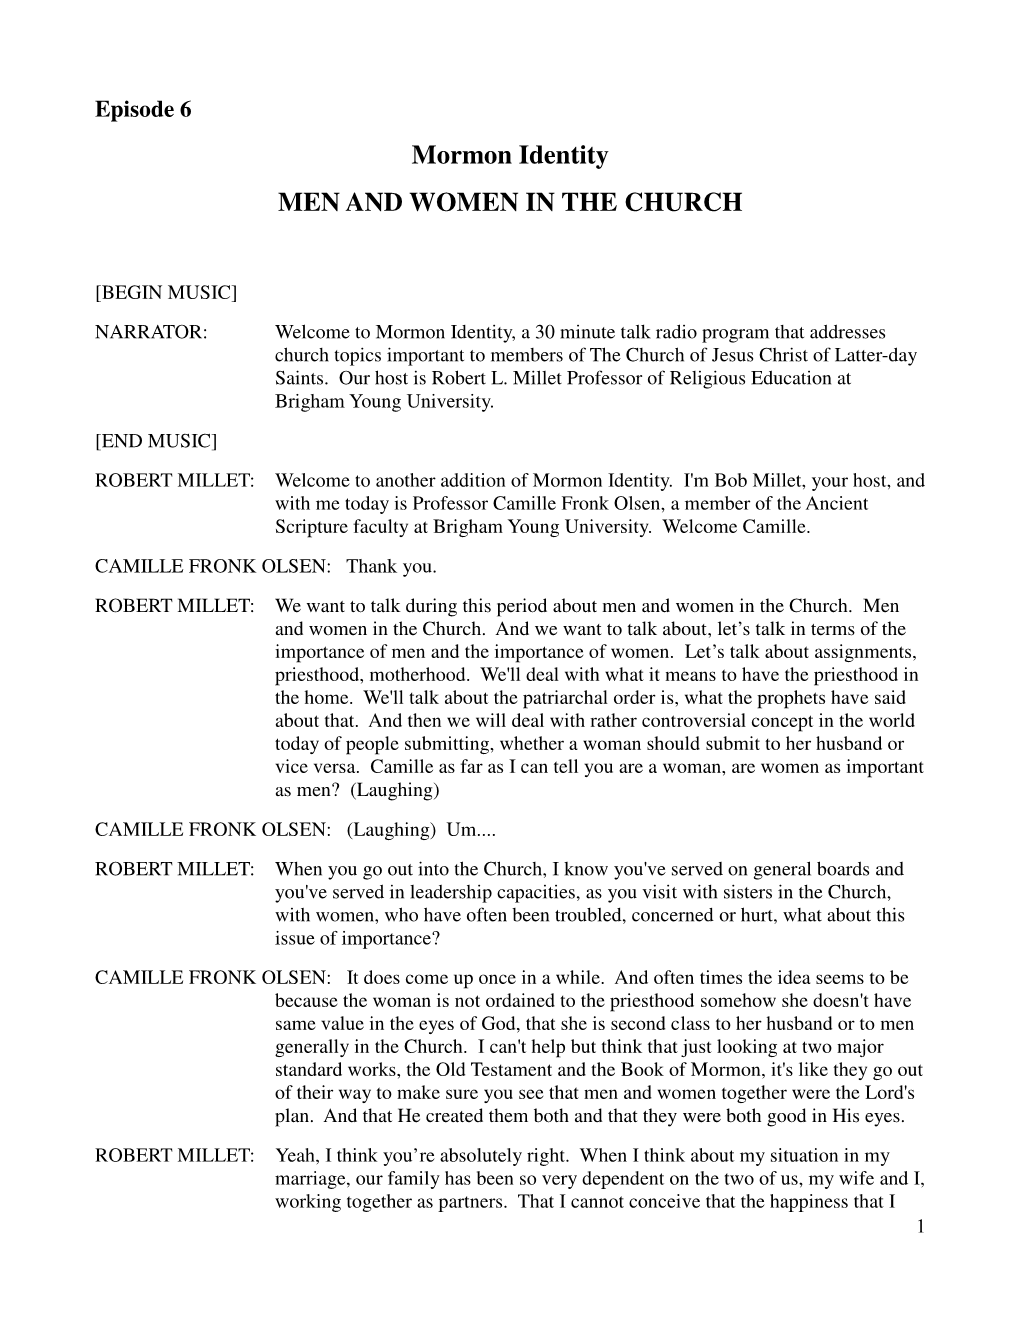 Mormon Identity MEN and WOMEN in the CHURCH